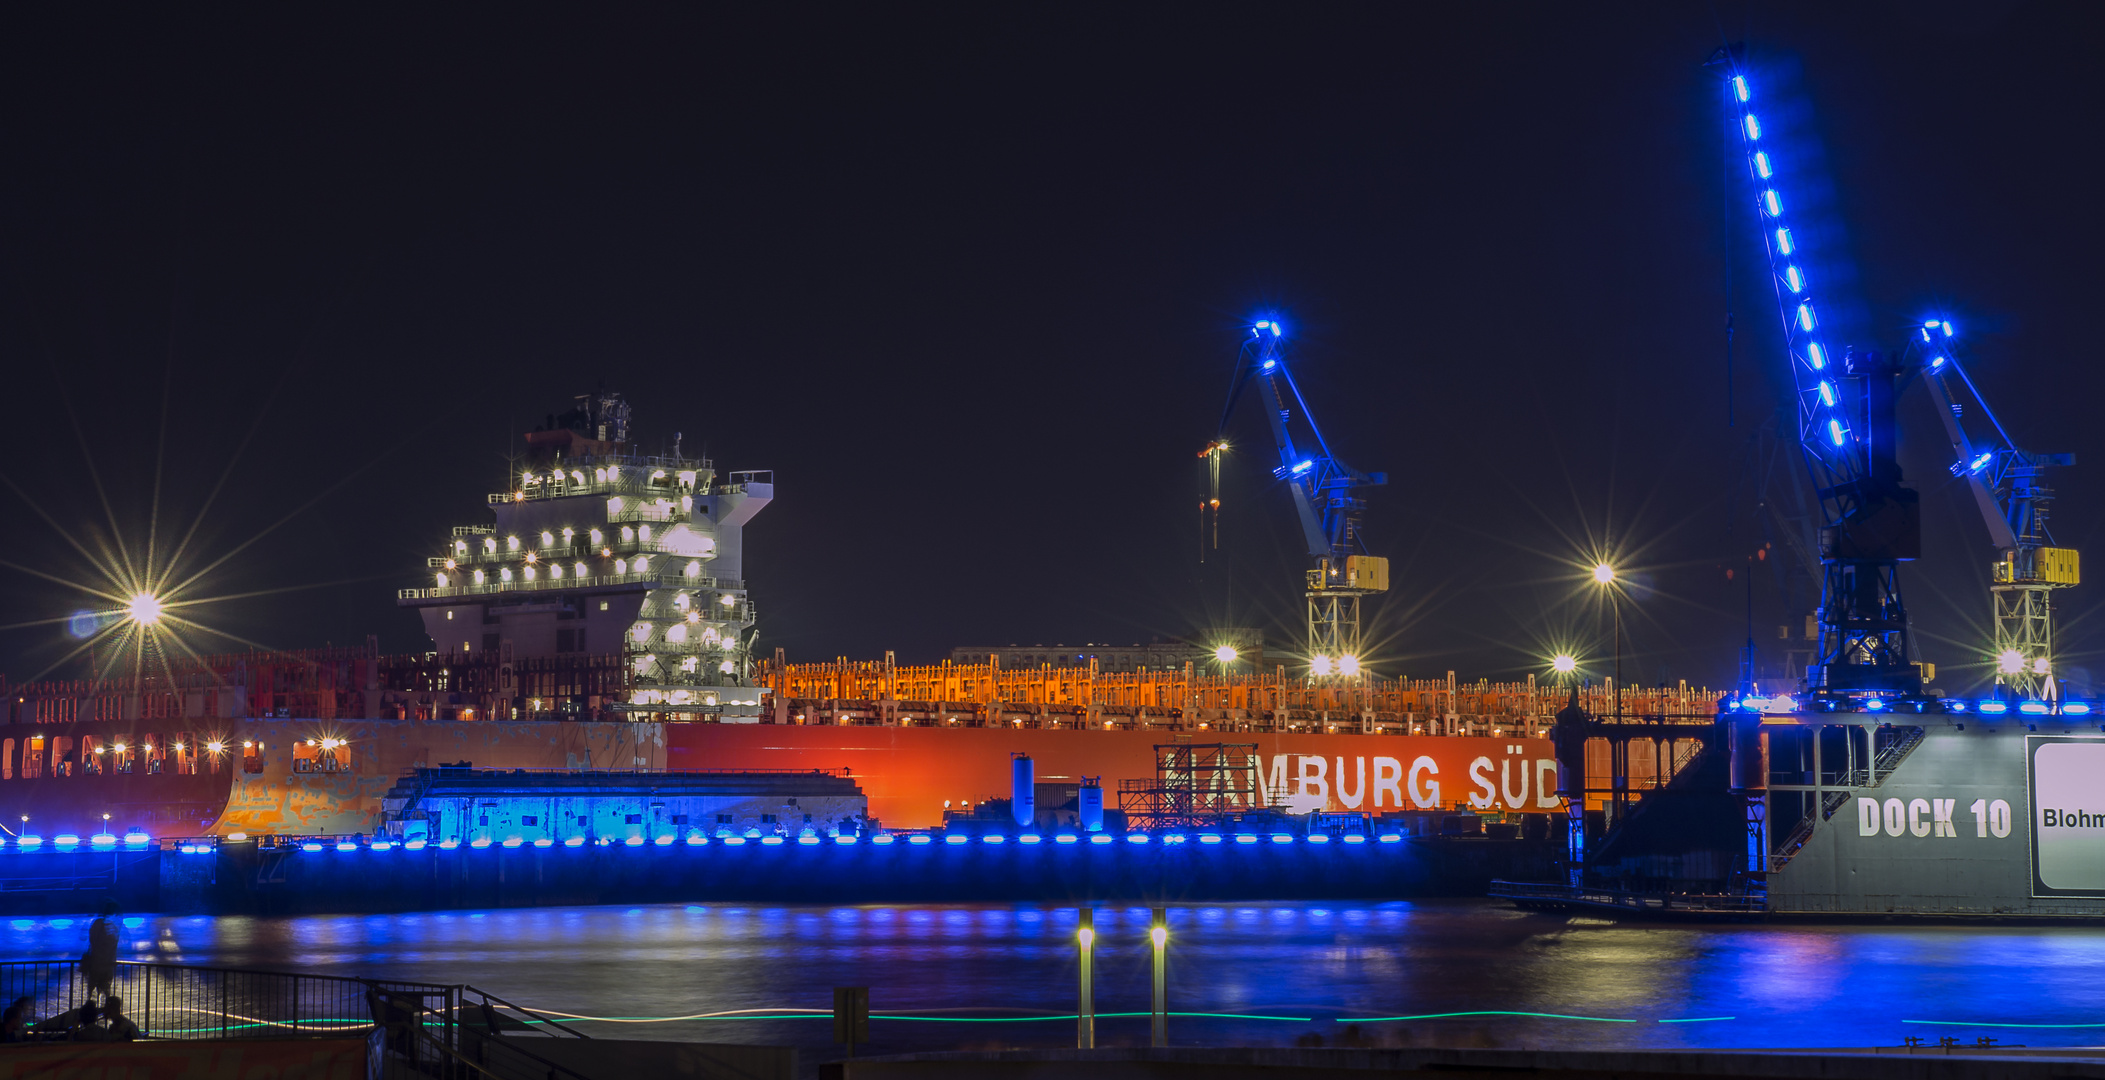 Blue Port Hamburg, Blohm + Voss